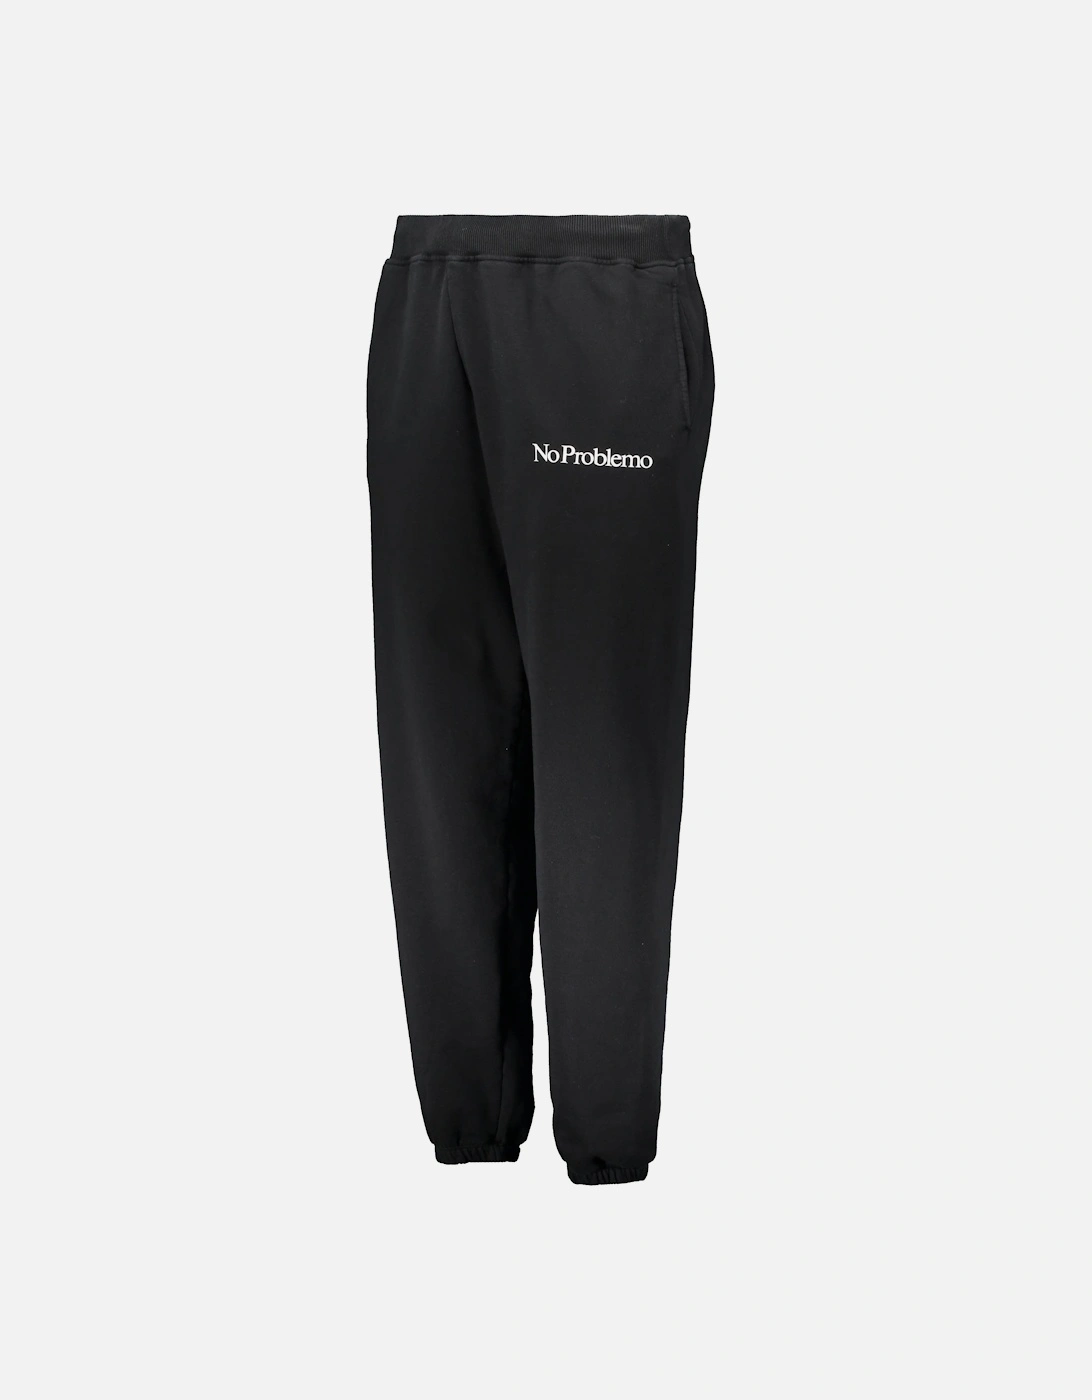 Mini Problemo Sweatpants - Black